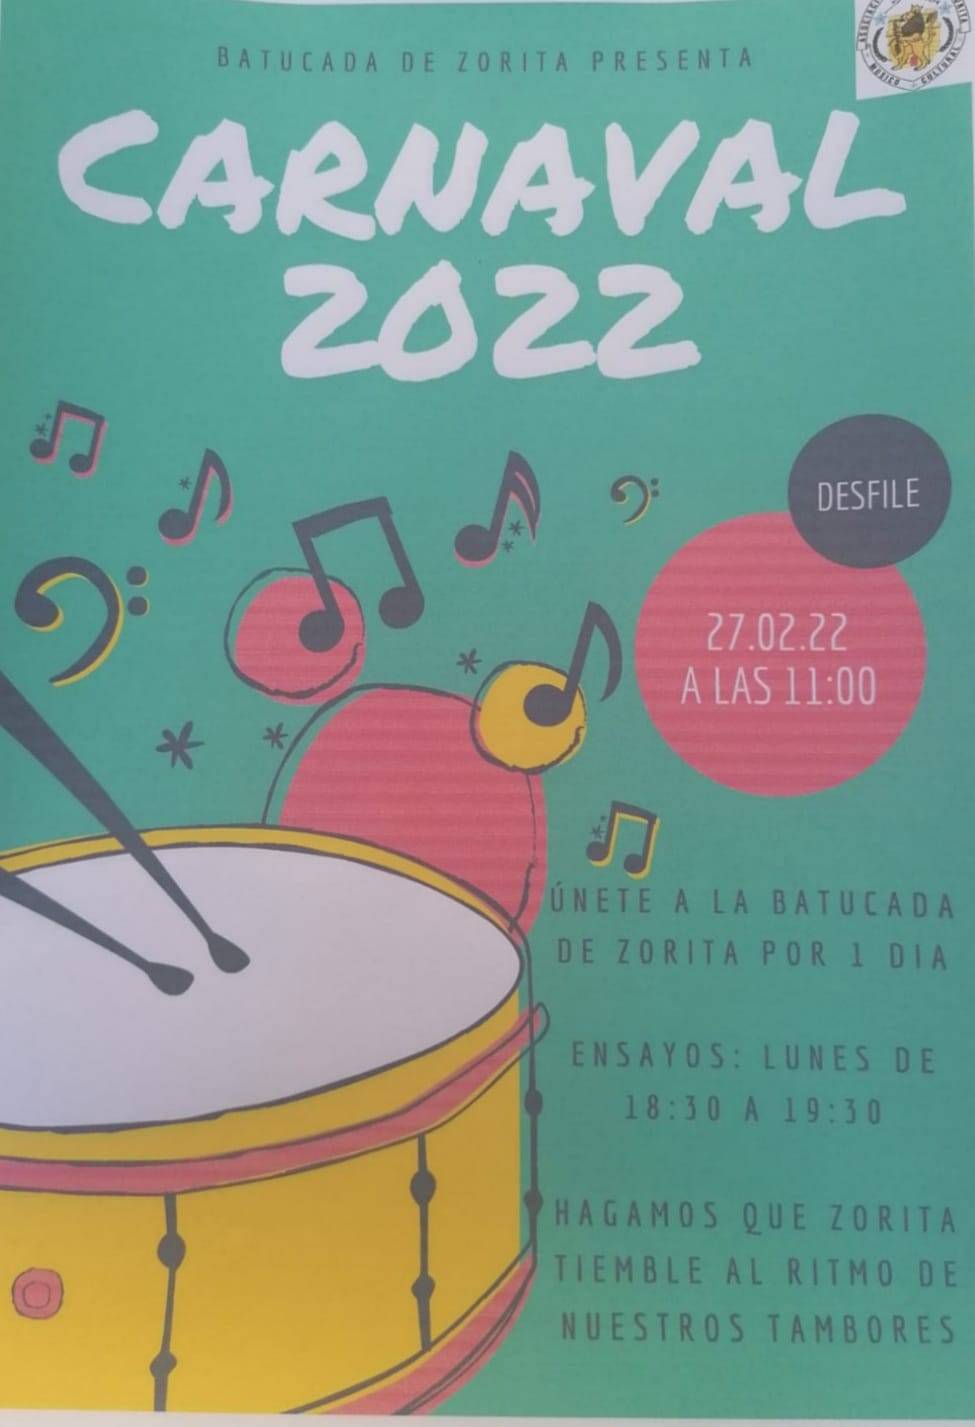 Carnaval (2022) - Zorita (Cáceres) 6